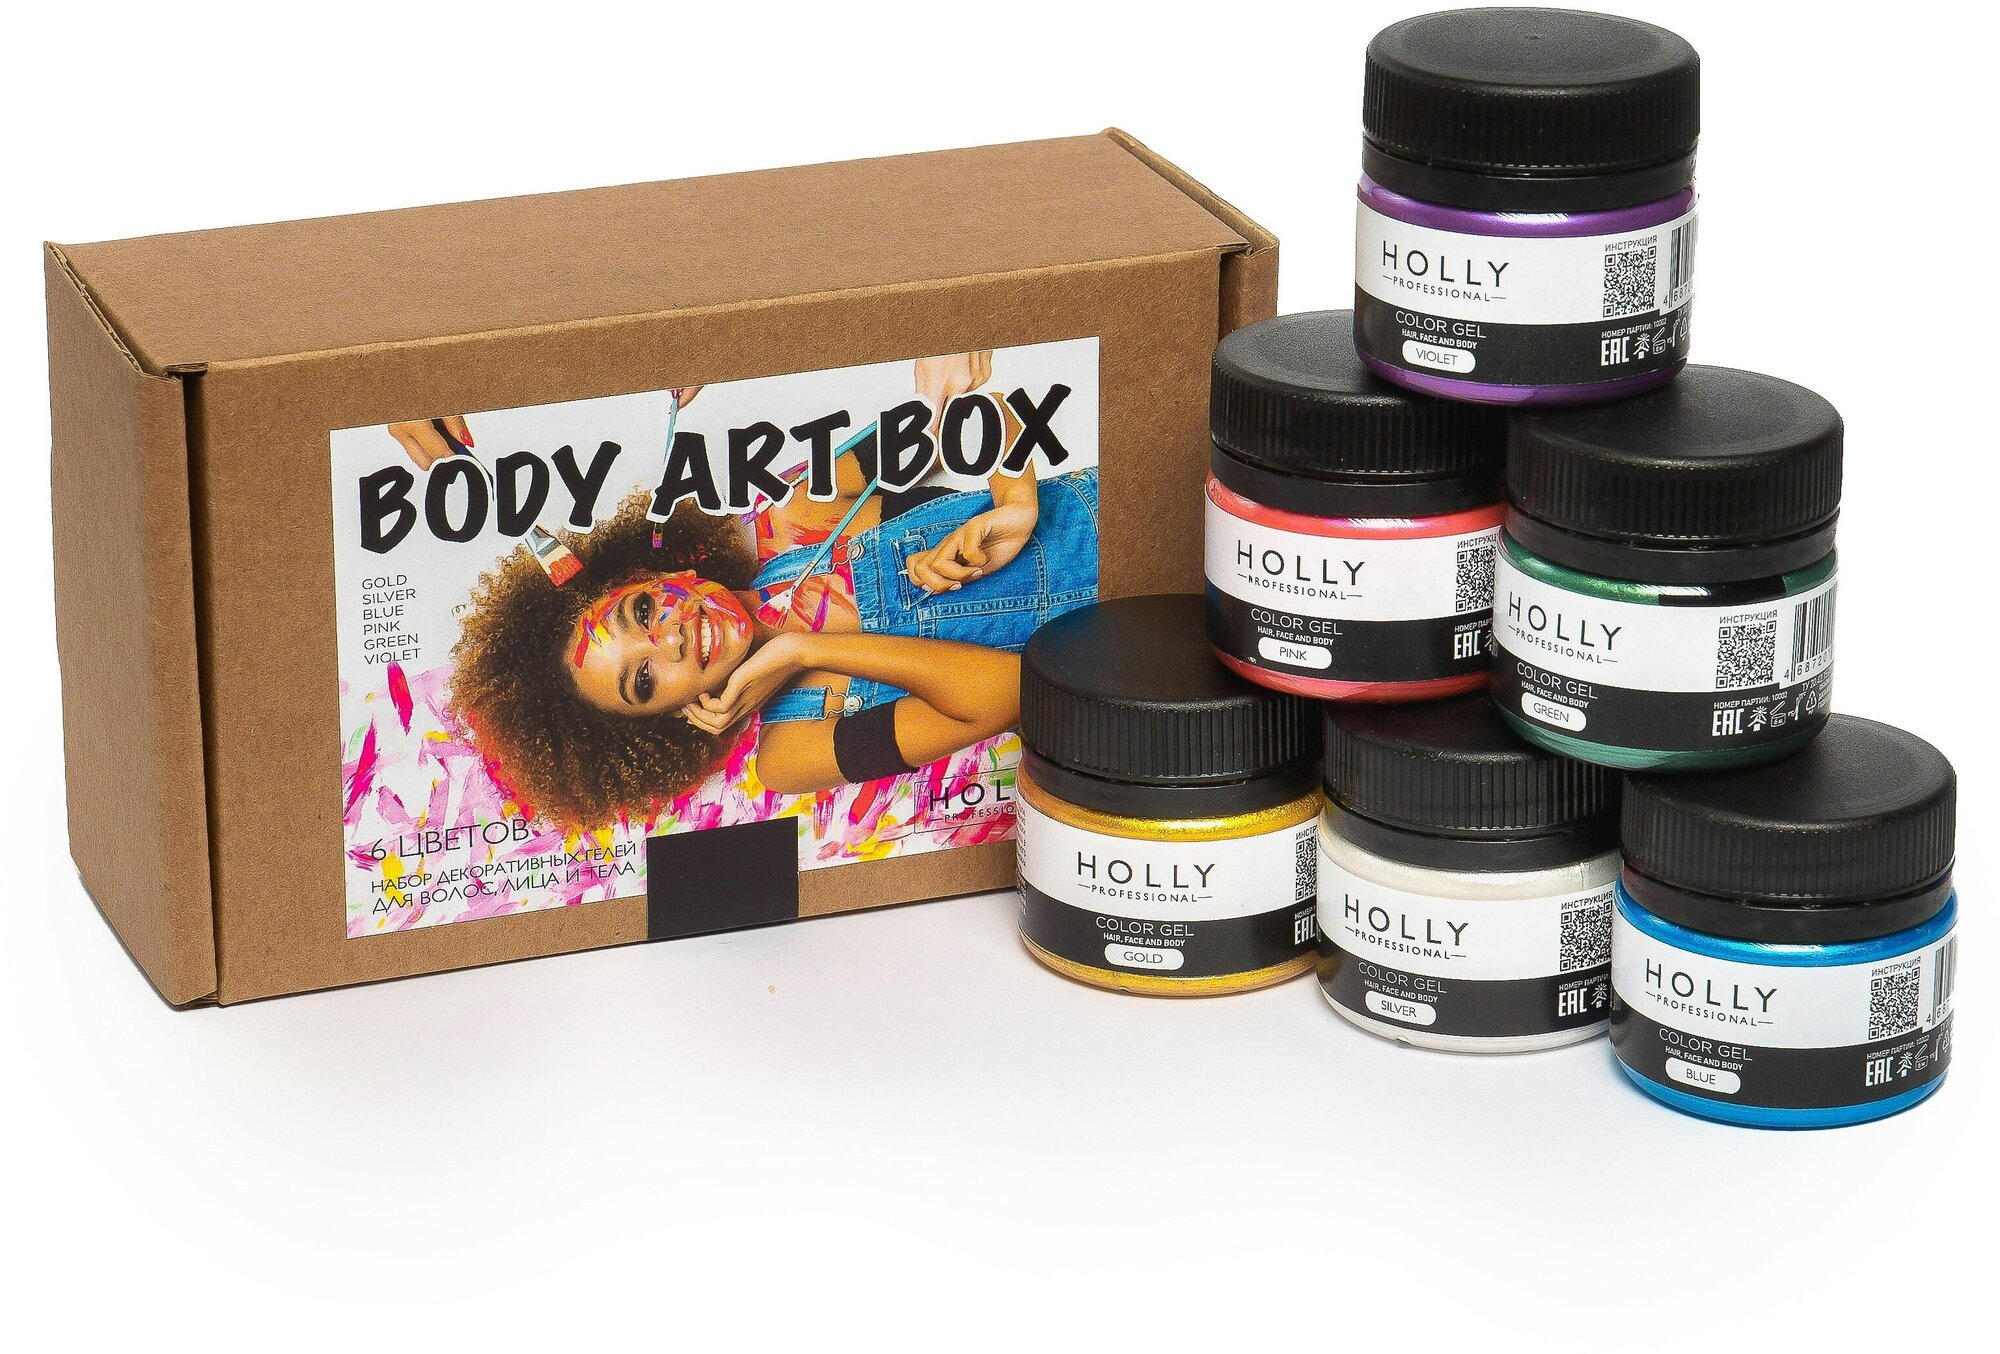 Holly Professional Грим на гелевой основе \ краски для лица и тела BODY ART BOX, 6 шт